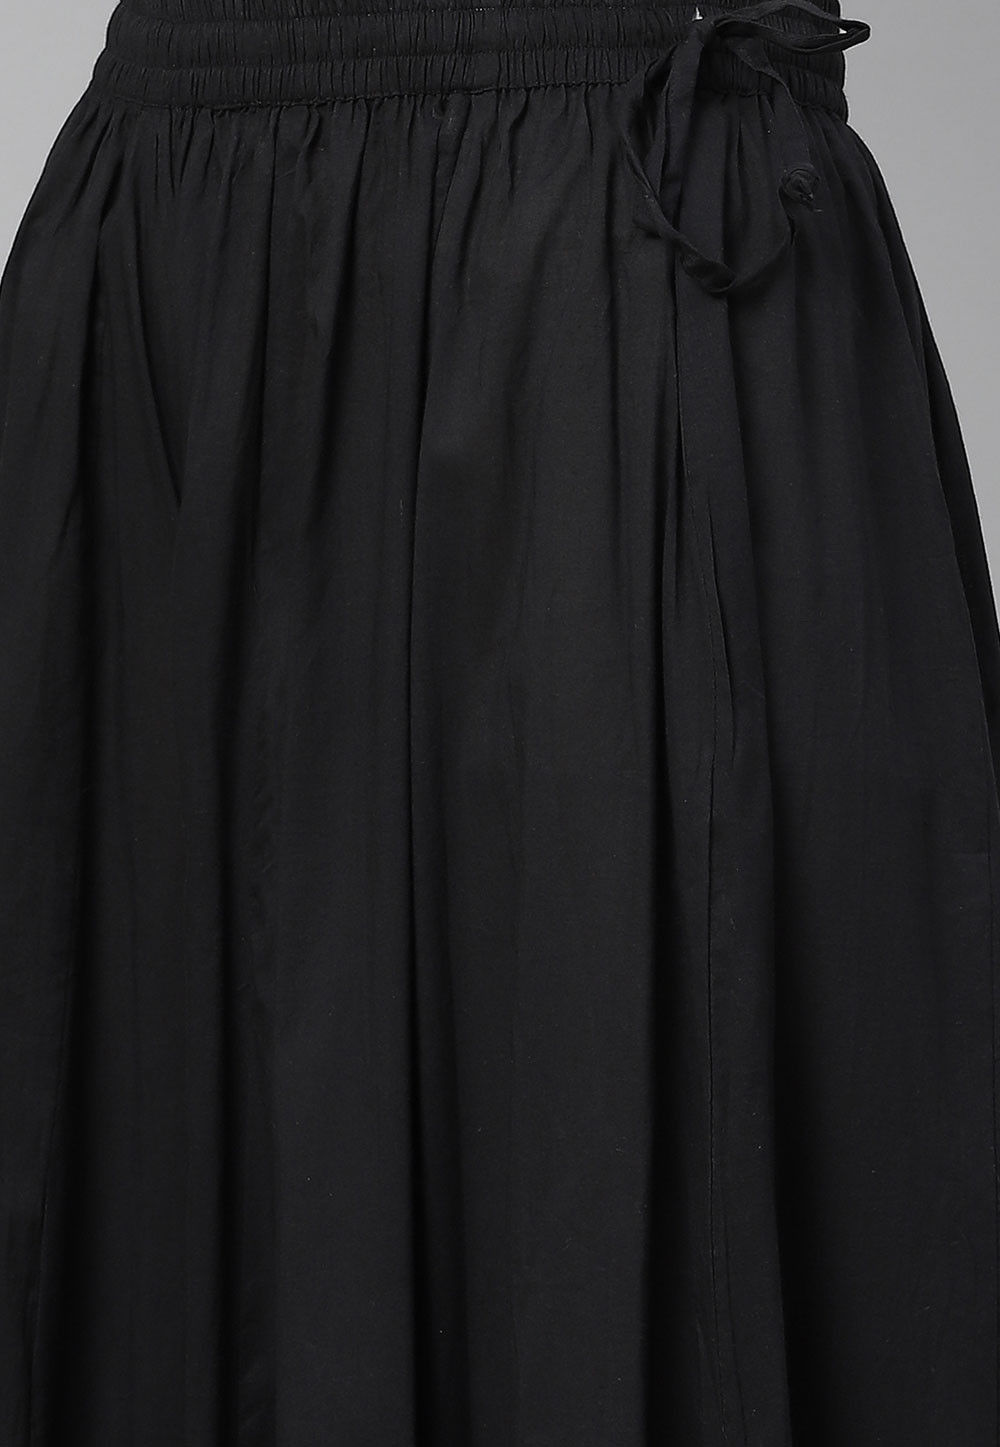 Printed Cotton Kurta with Skirt in Black : TKV186